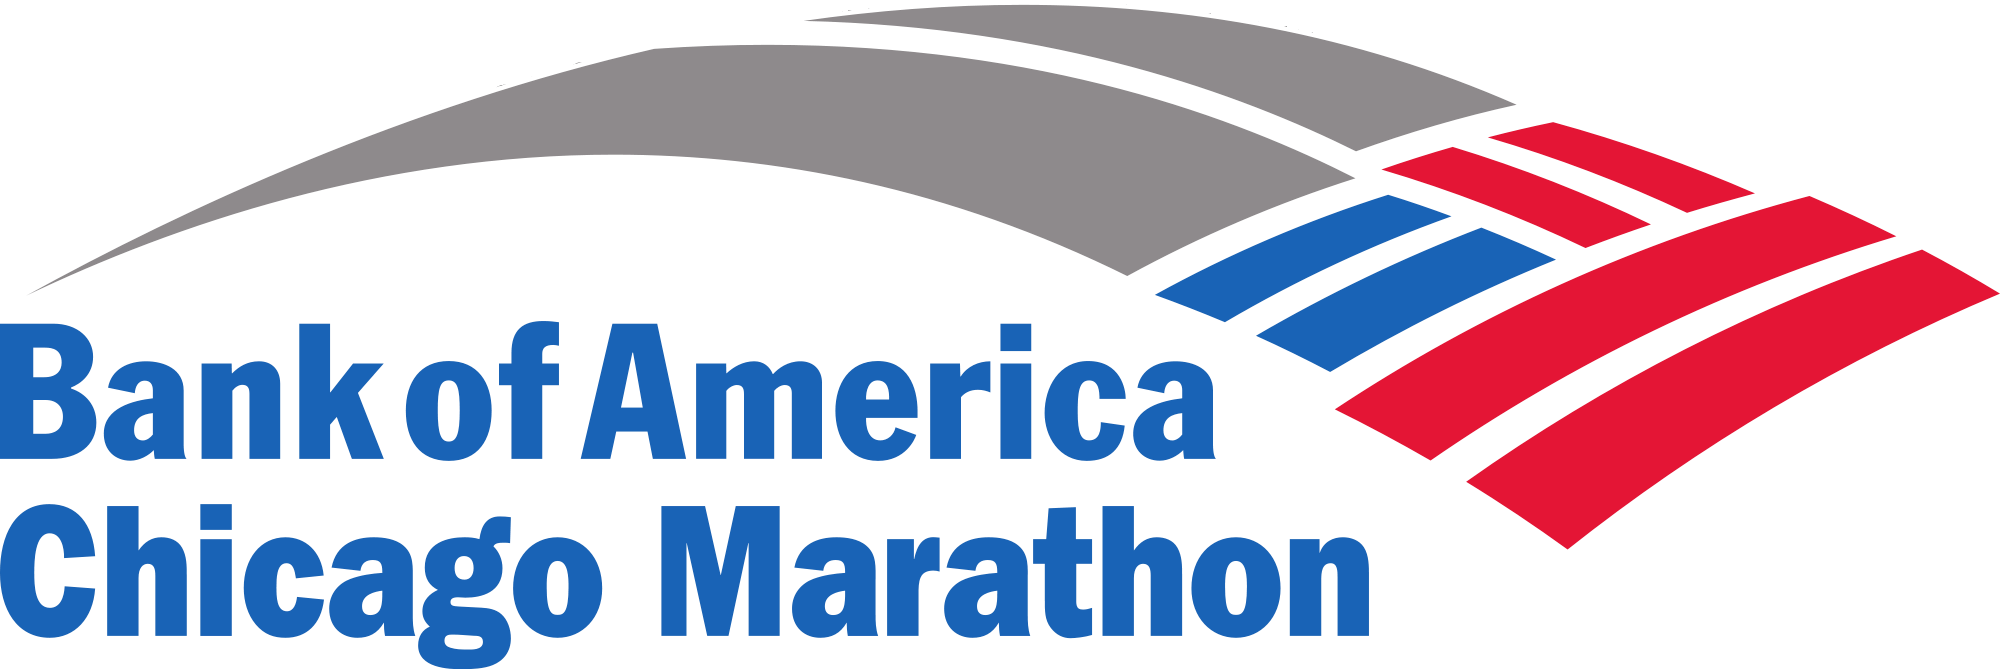 Marathon Logo - File:Chicago Marathon Logo.png - Wikimedia Commons